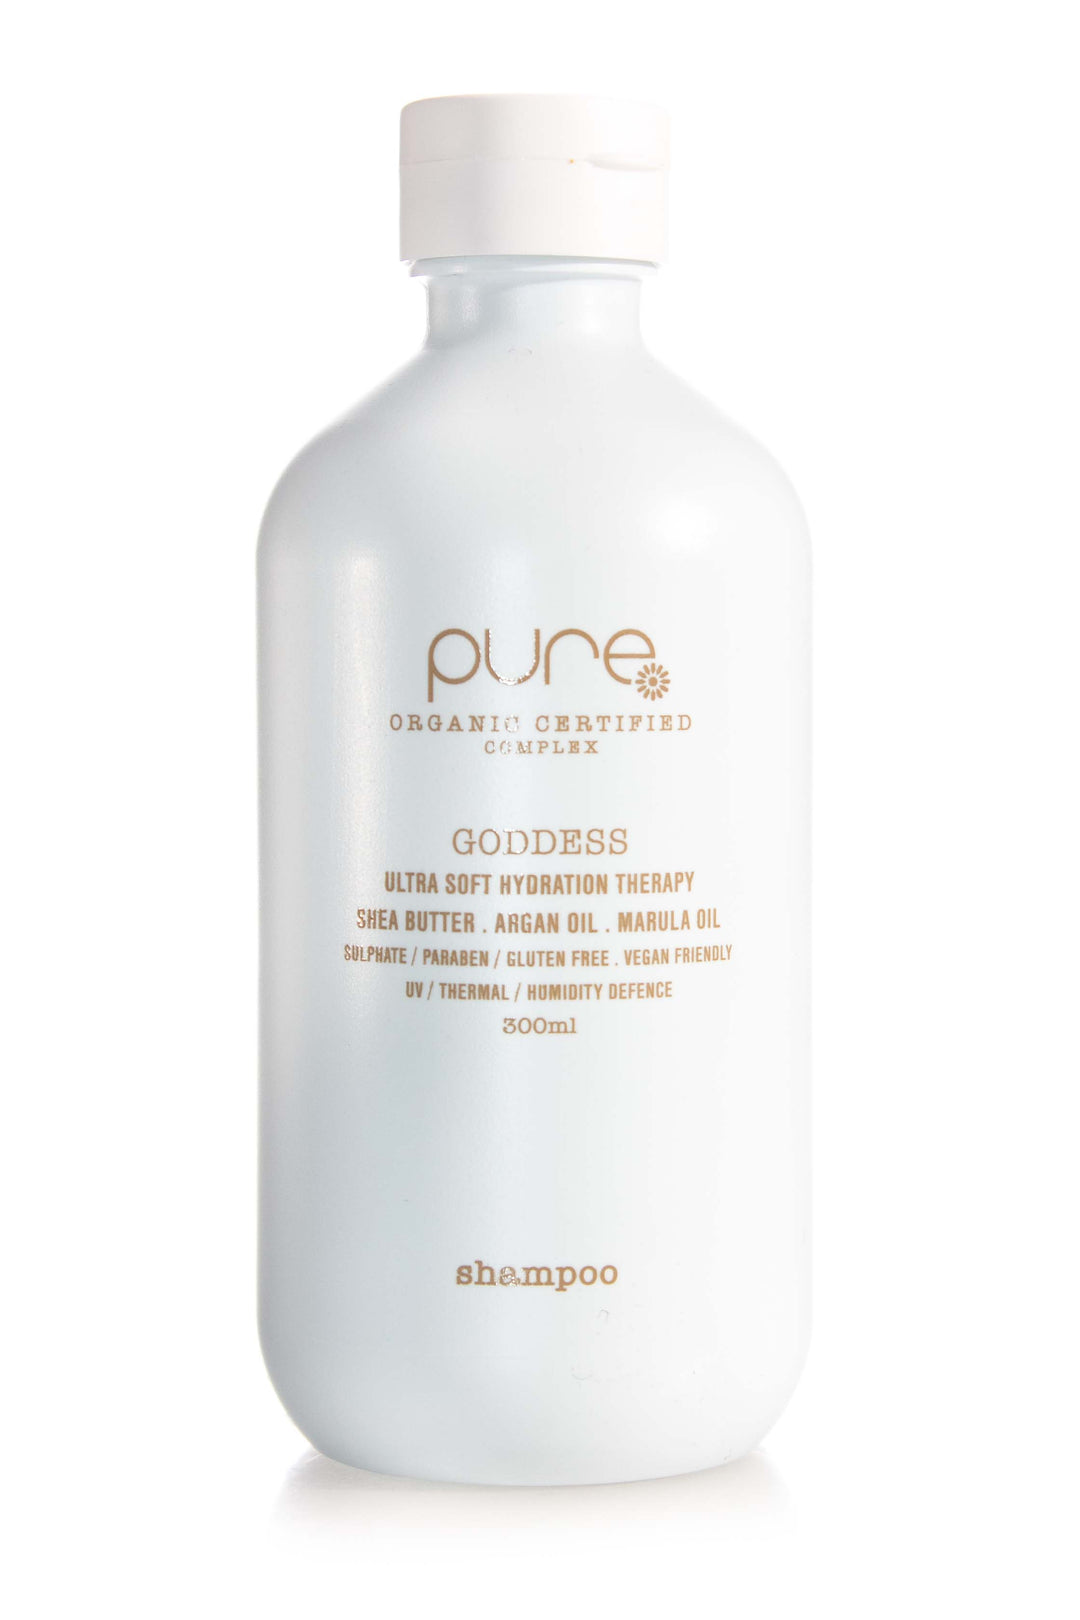 pure-goddess-shampoo-300ml